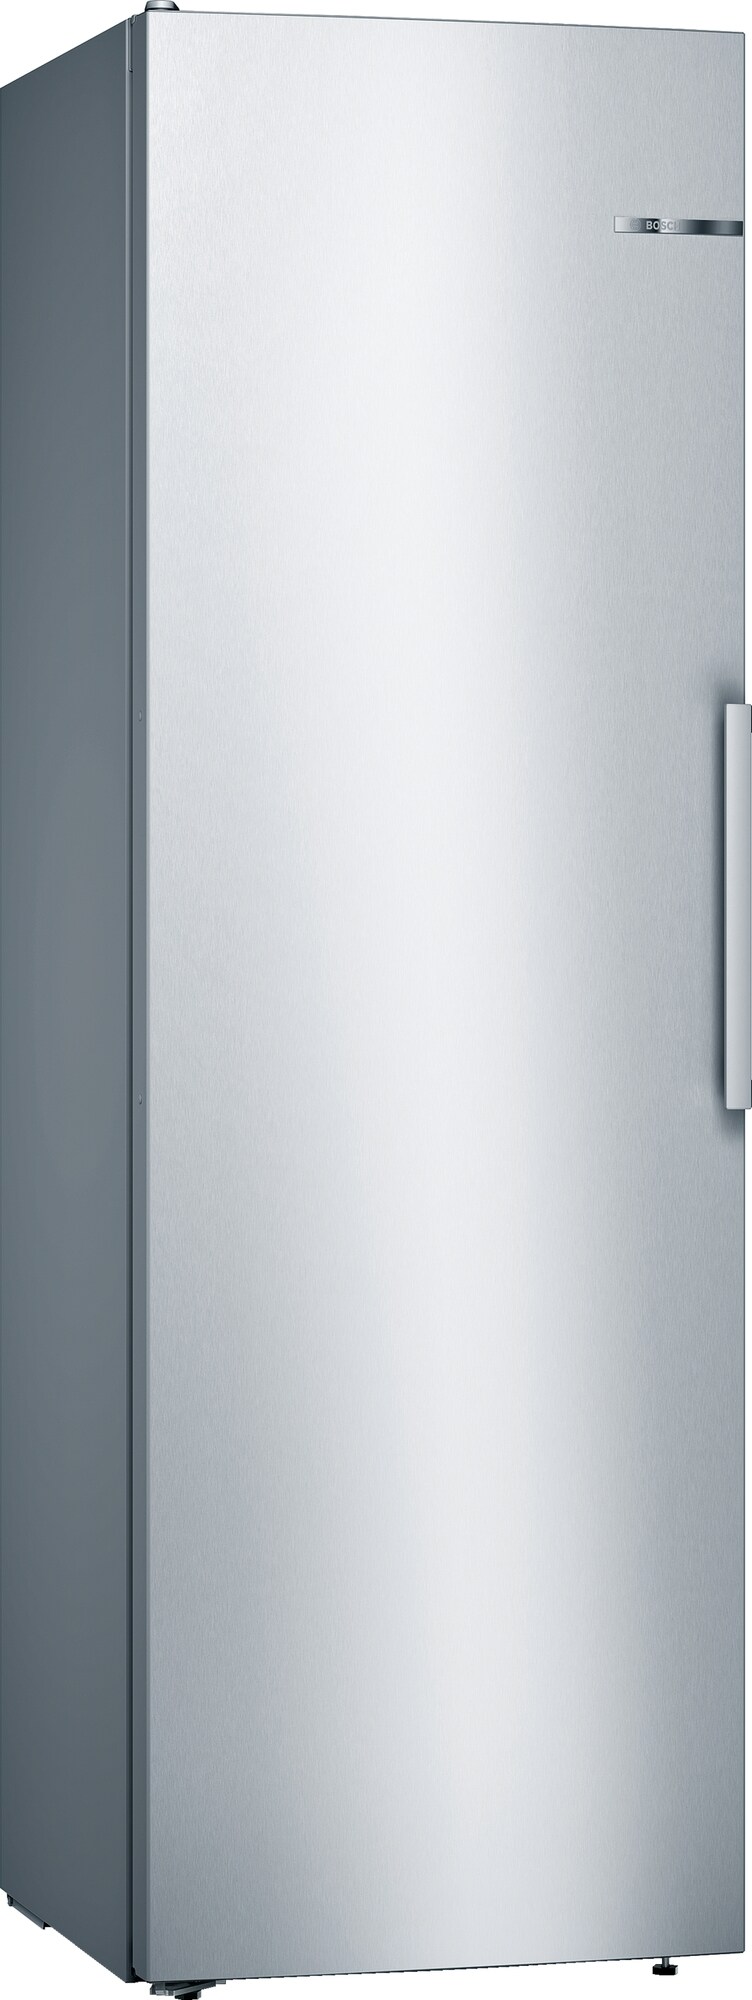 Bosch Series 4 køleskab KSV36VIEP